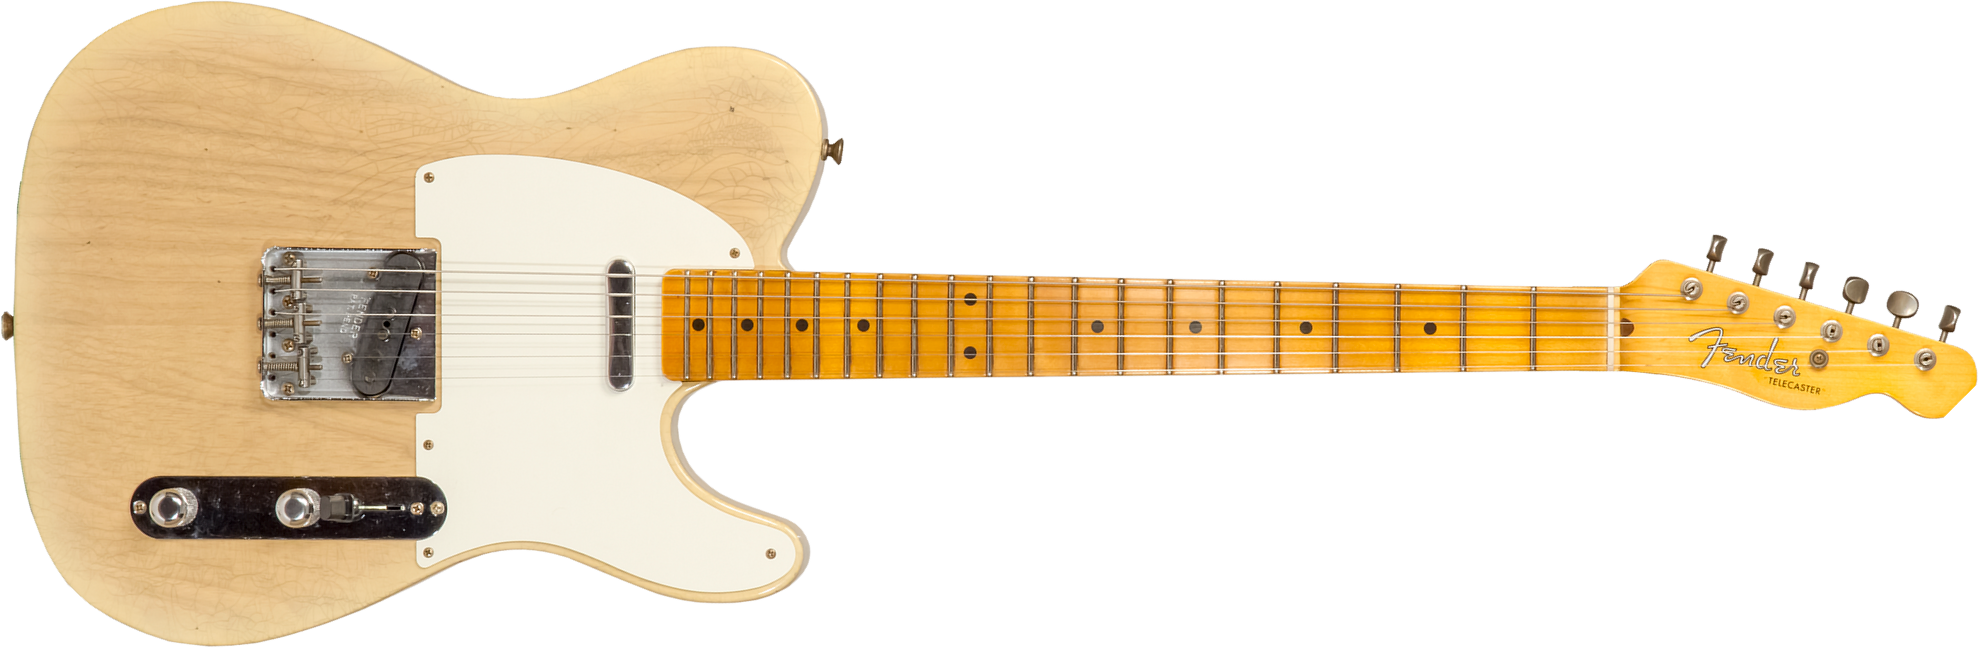 Fender Custom Shop Tele 1955 2s Ht Mn #cz570232 - Journeyman Relic Natural Blonde - Tel shape electric guitar - Main picture